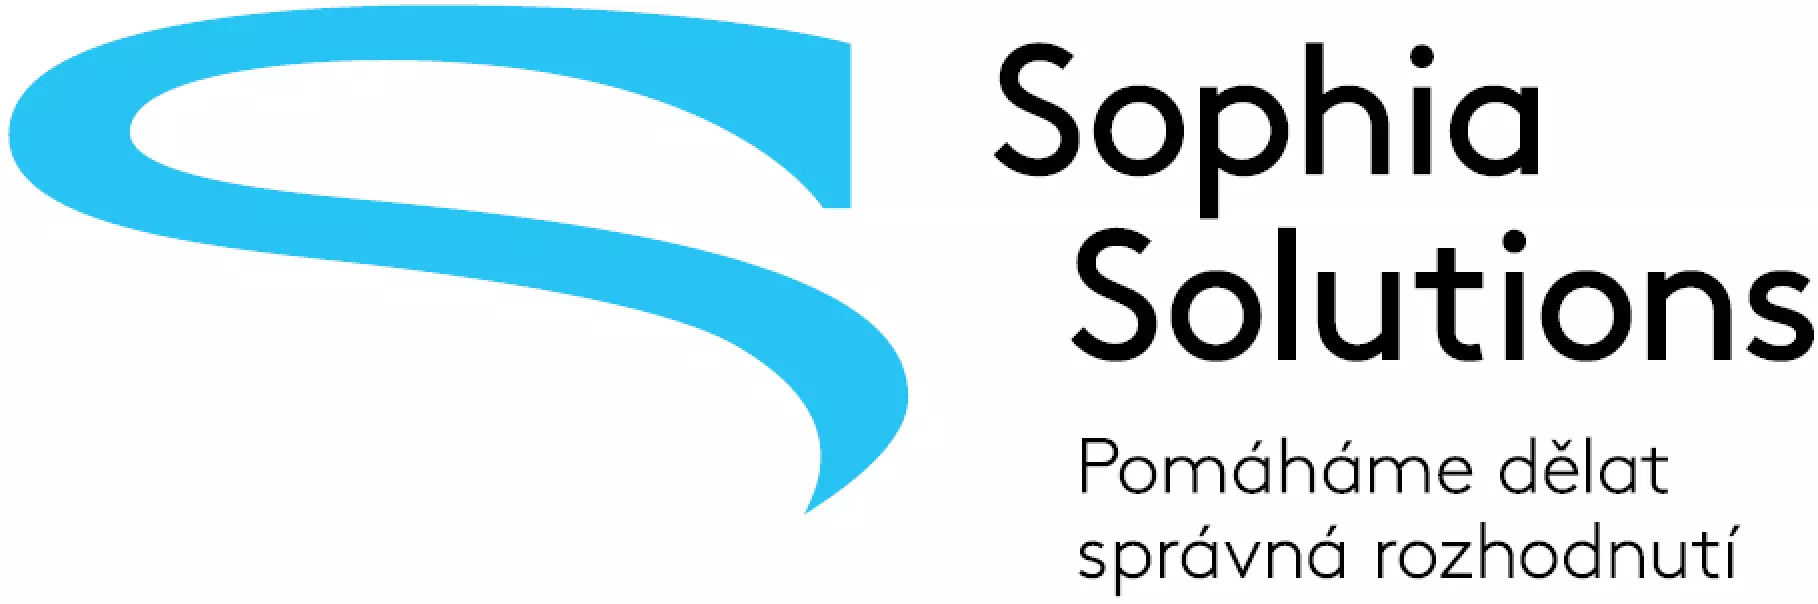 sophia-solution.png